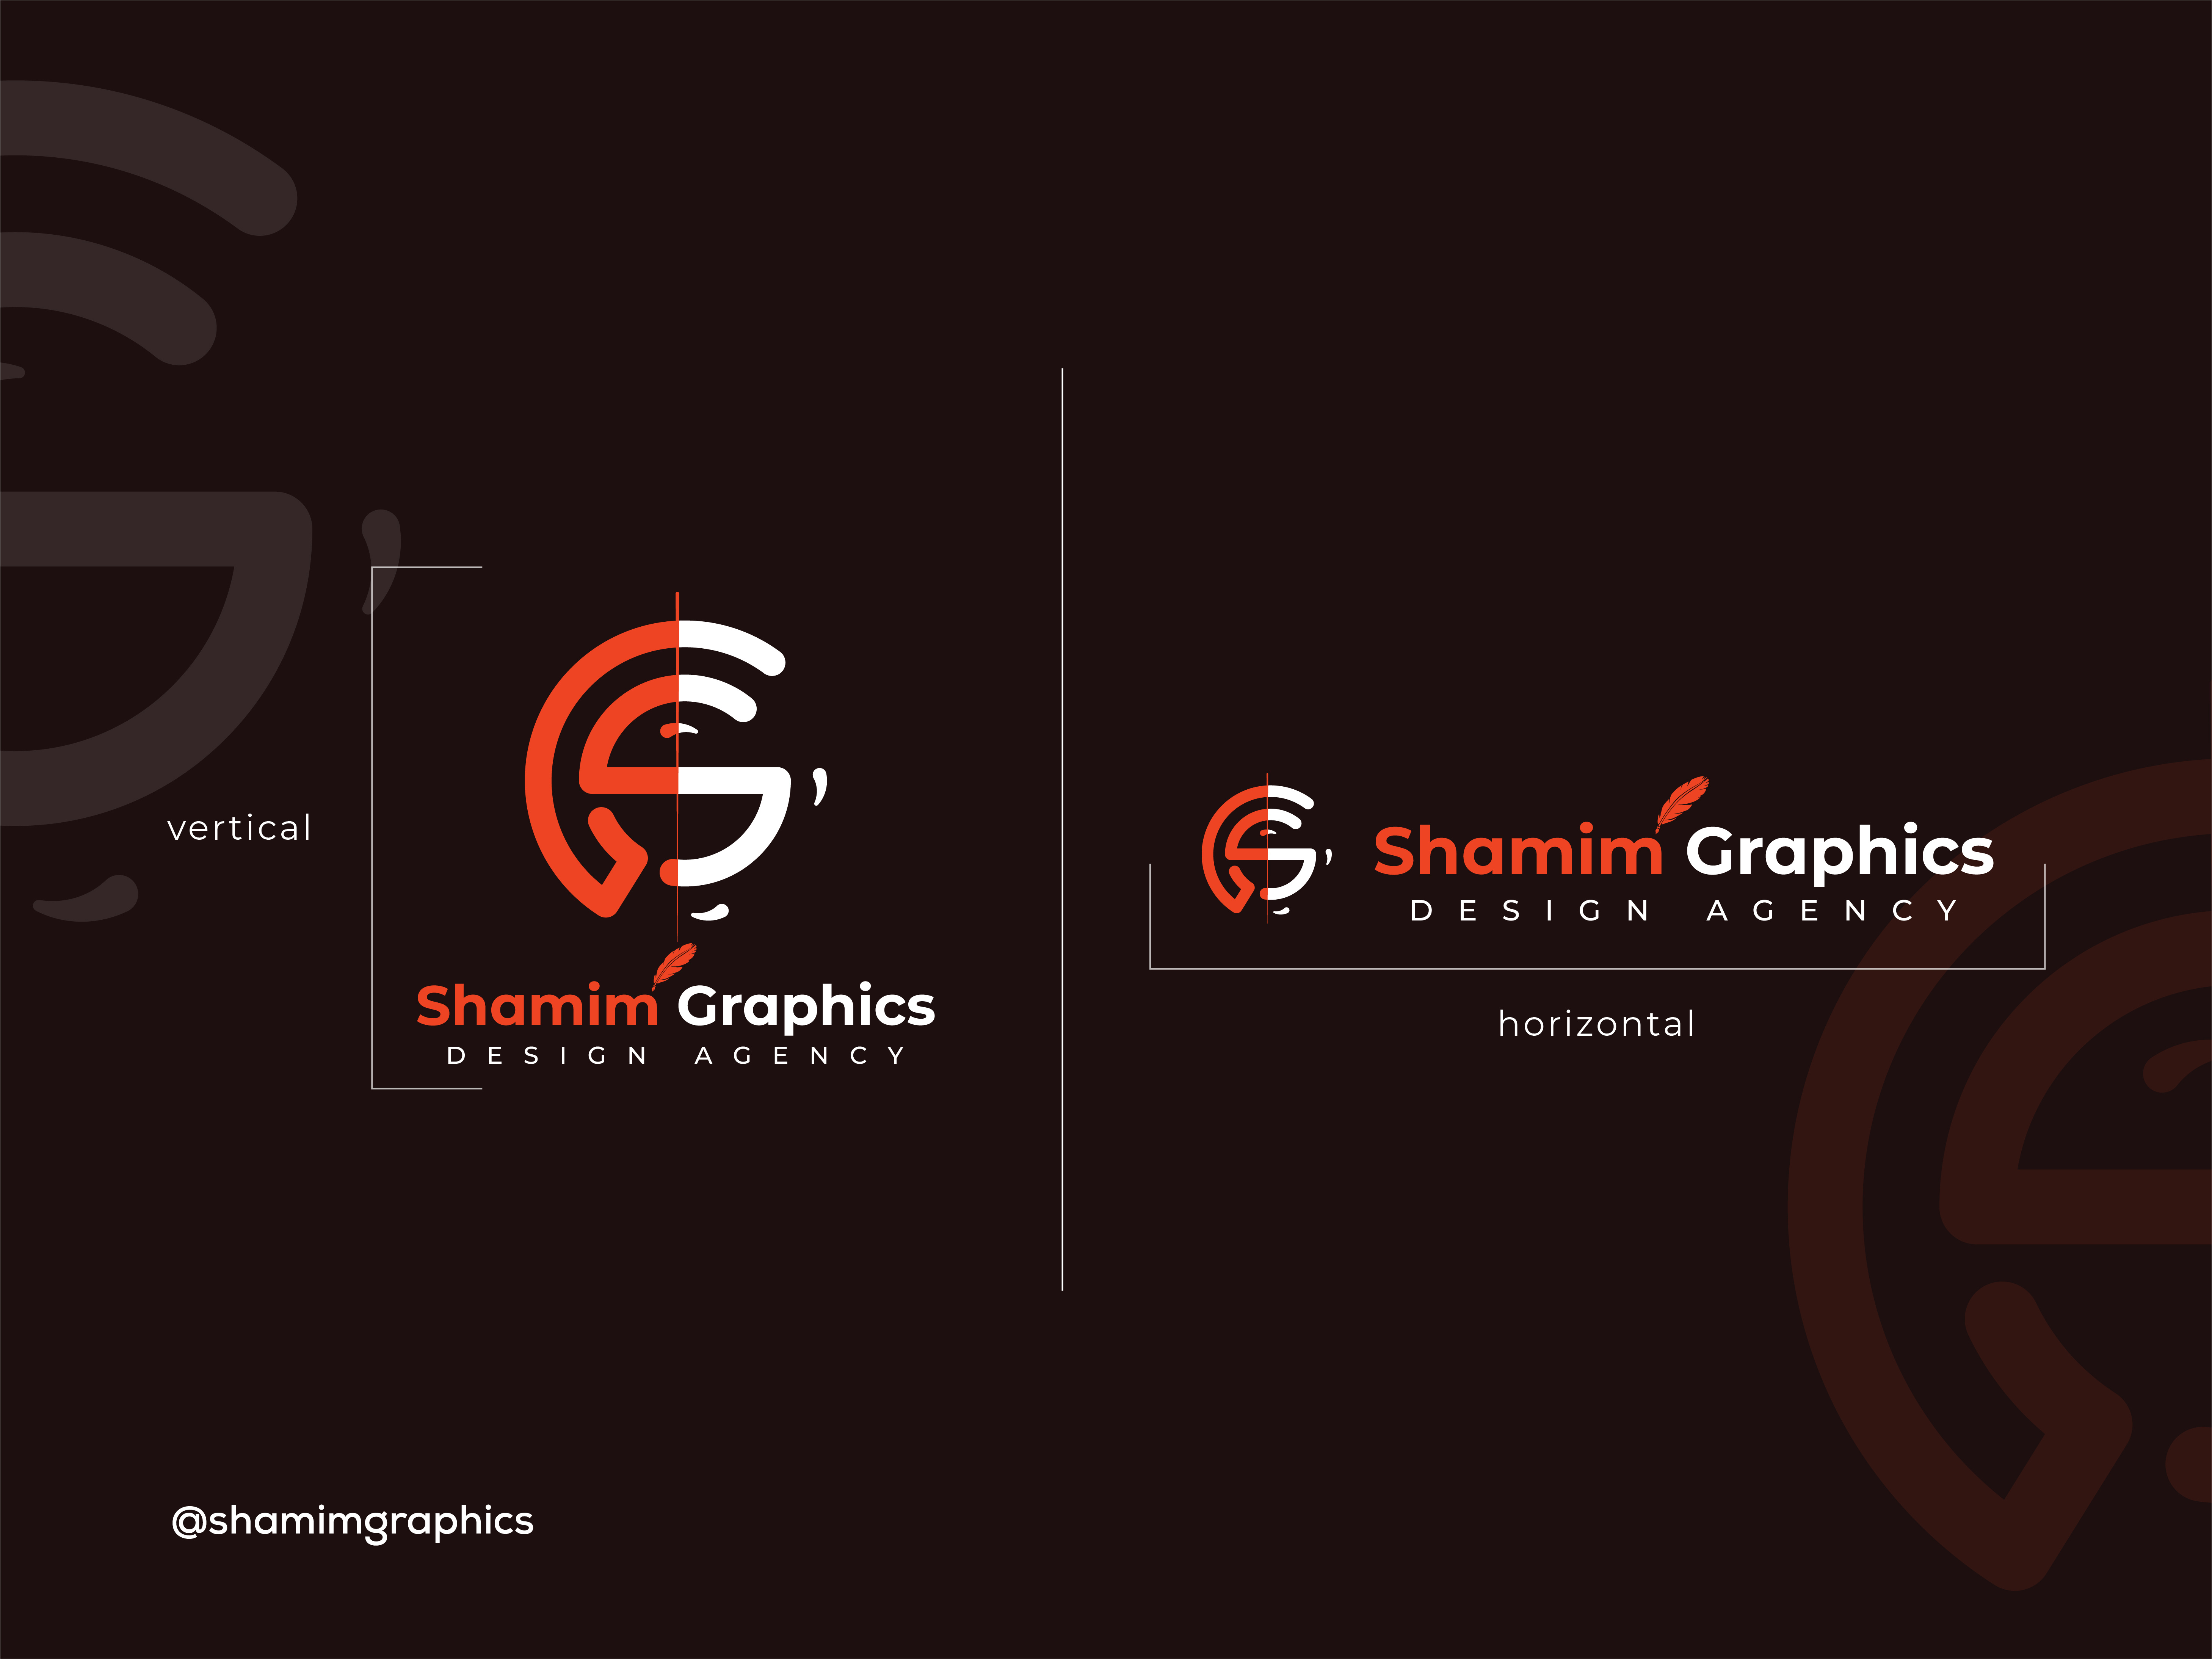 Shamim Graphics v2 Logo Design by Shamim Graphics on Dribbble